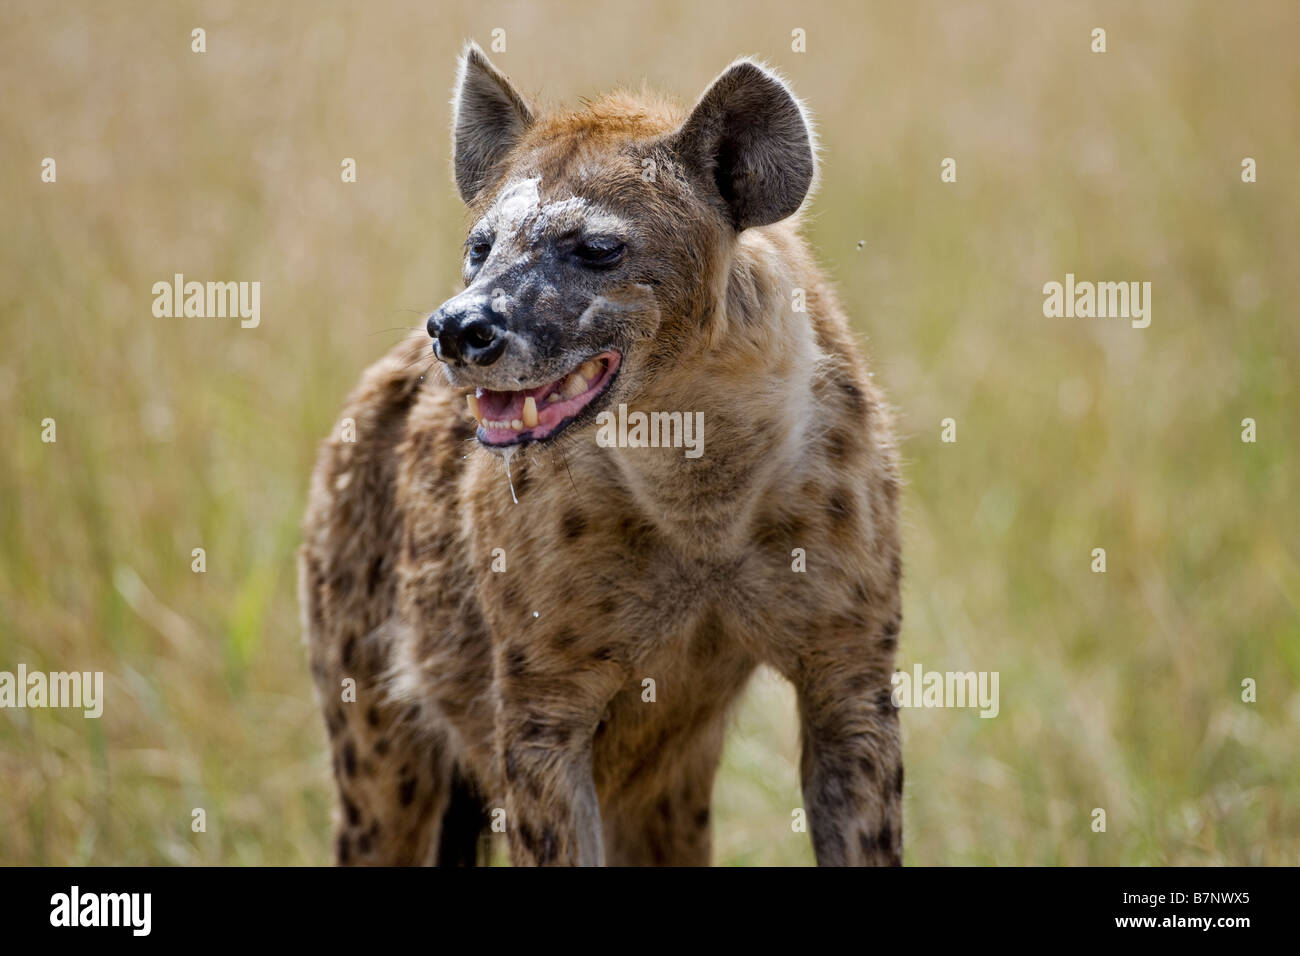 Afrique, Kenya, Masai Mara, district de Narok. Une hyène tachetée dans la Masai Mara National Reserve du sud du Kenya. Banque D'Images